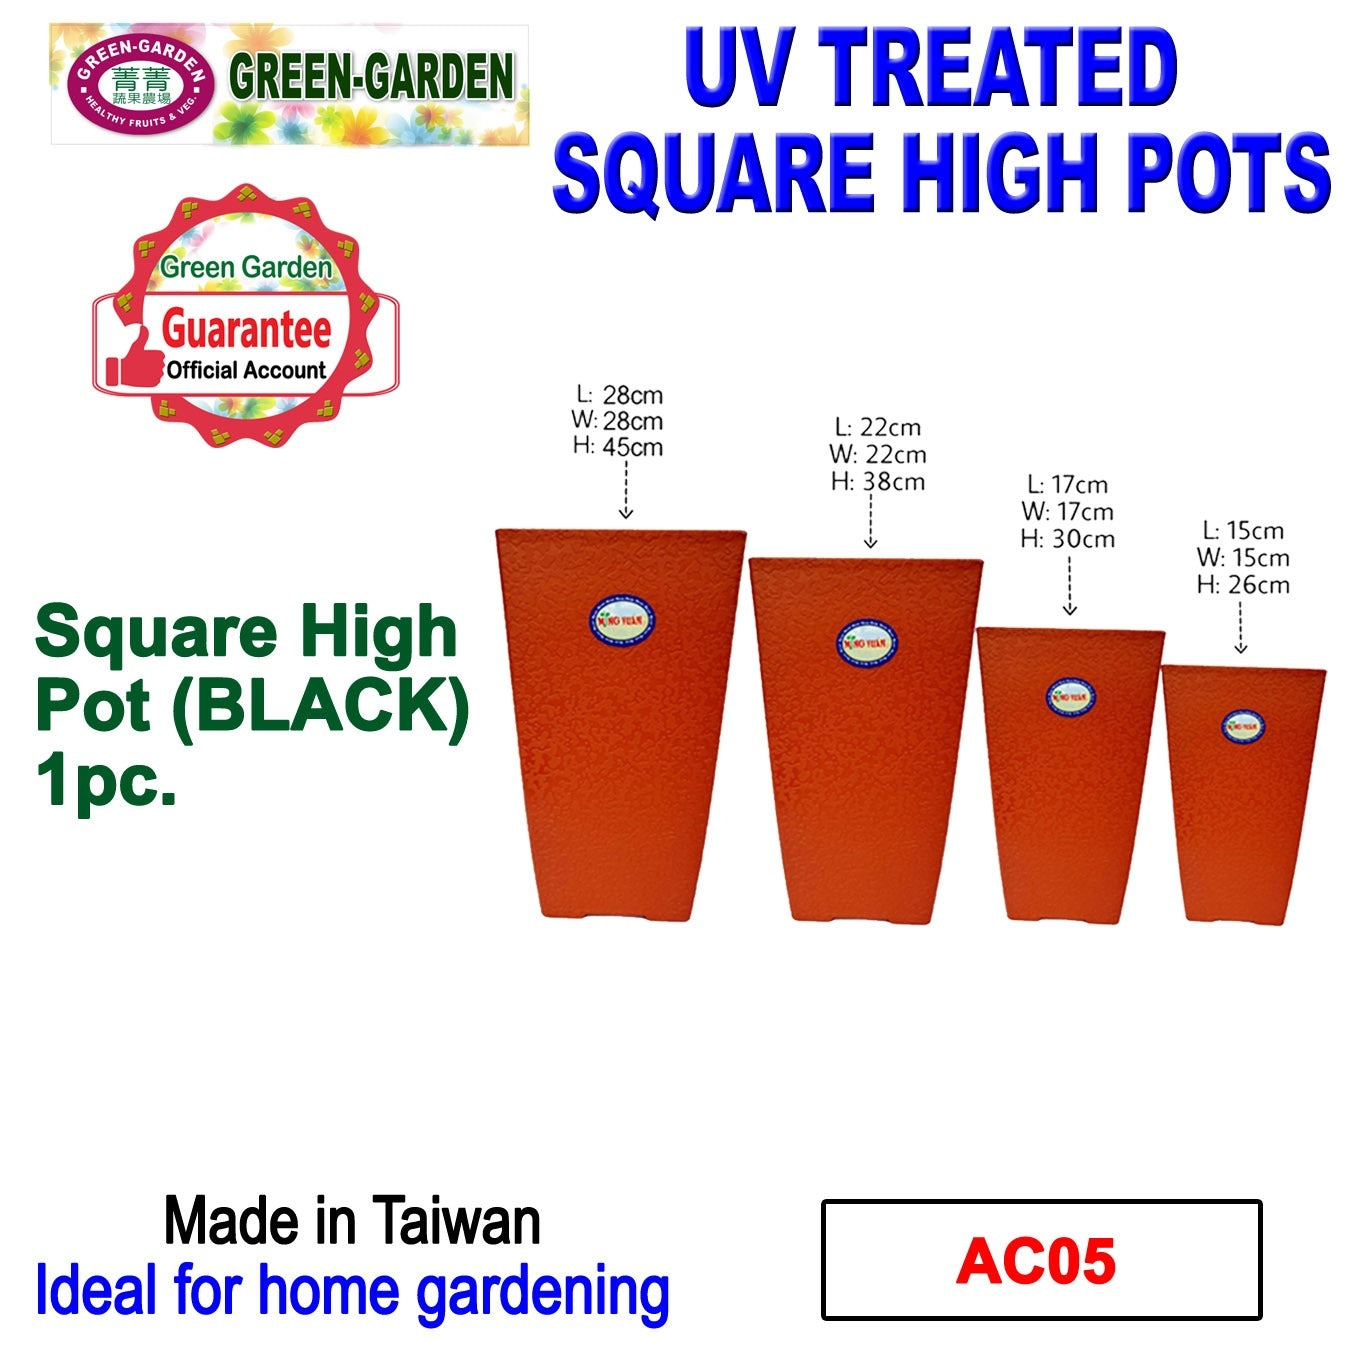 UV TREATED Square High Pot Size: 22x22x38cm